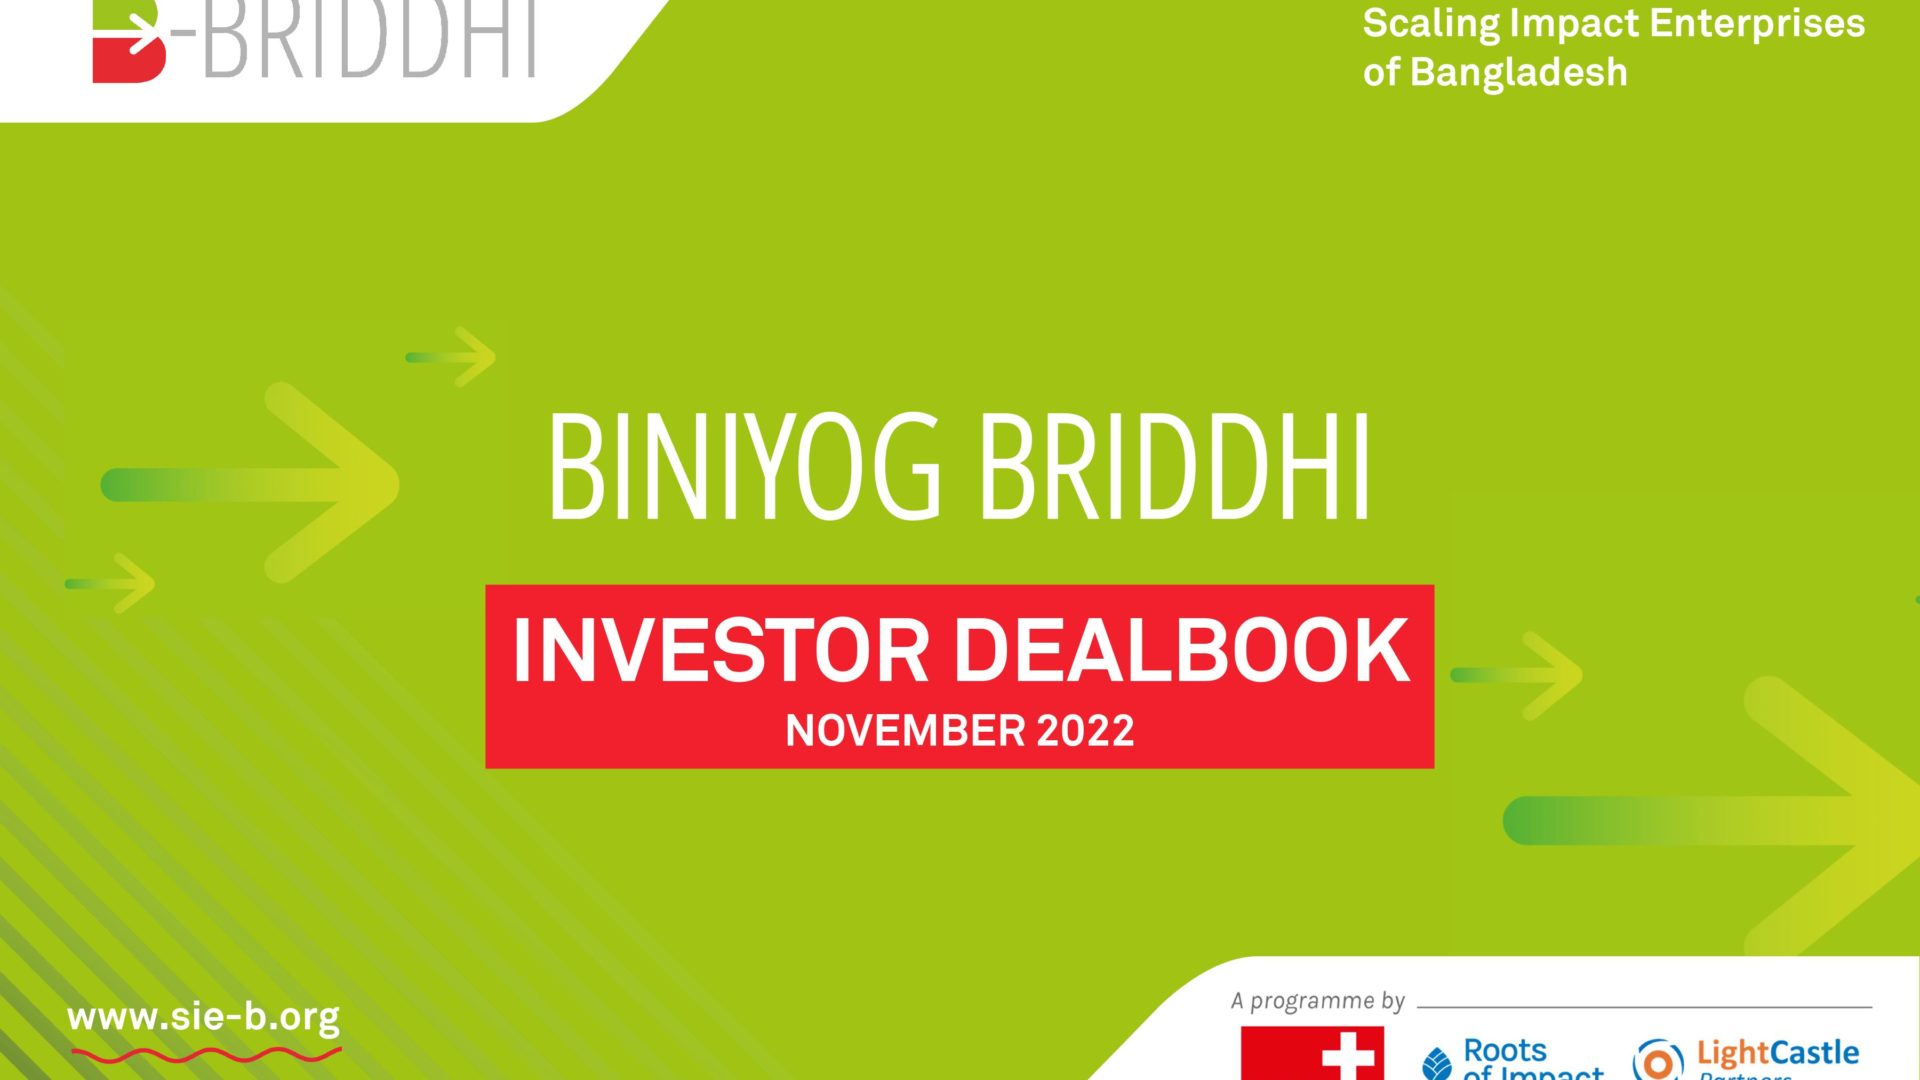 Biniyog Briddhi (B-Briddhi) Investor Dealbook 2022